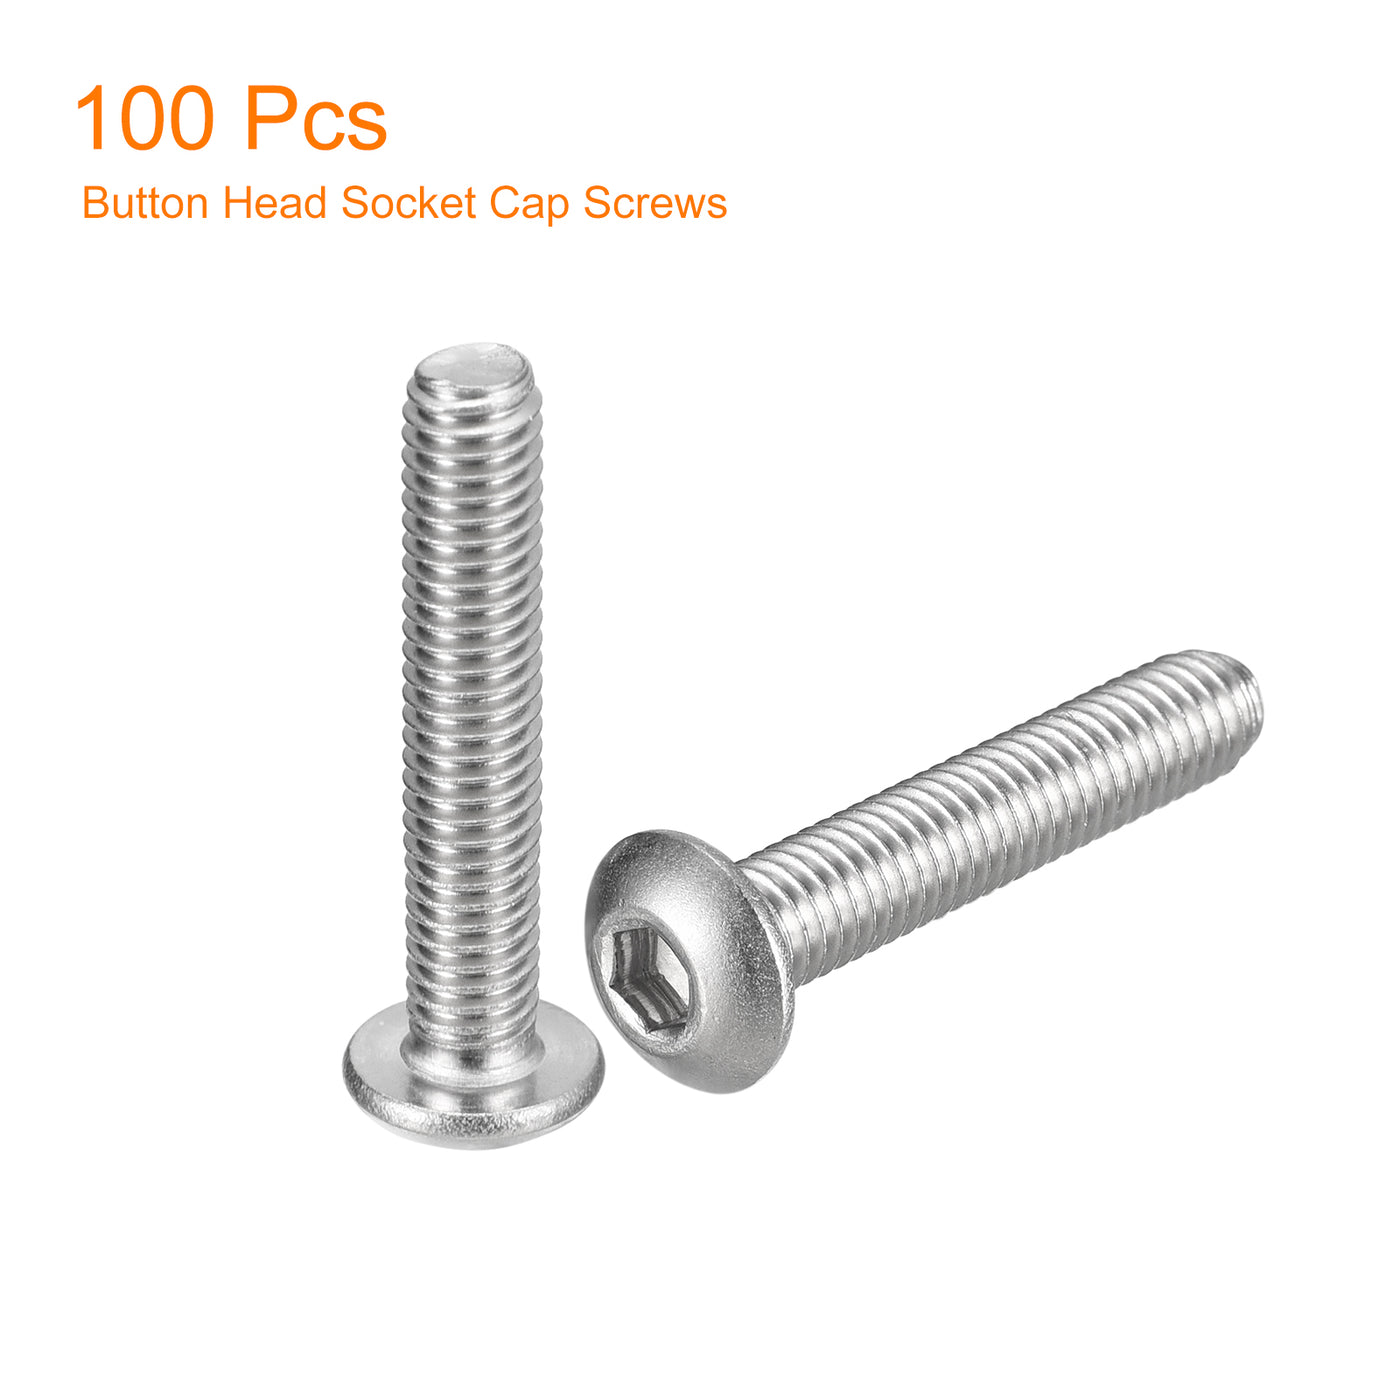 uxcell Uxcell #10-32x1" Button Head Socket Cap Screws, 100pcs 304 Stainless Steel Screws